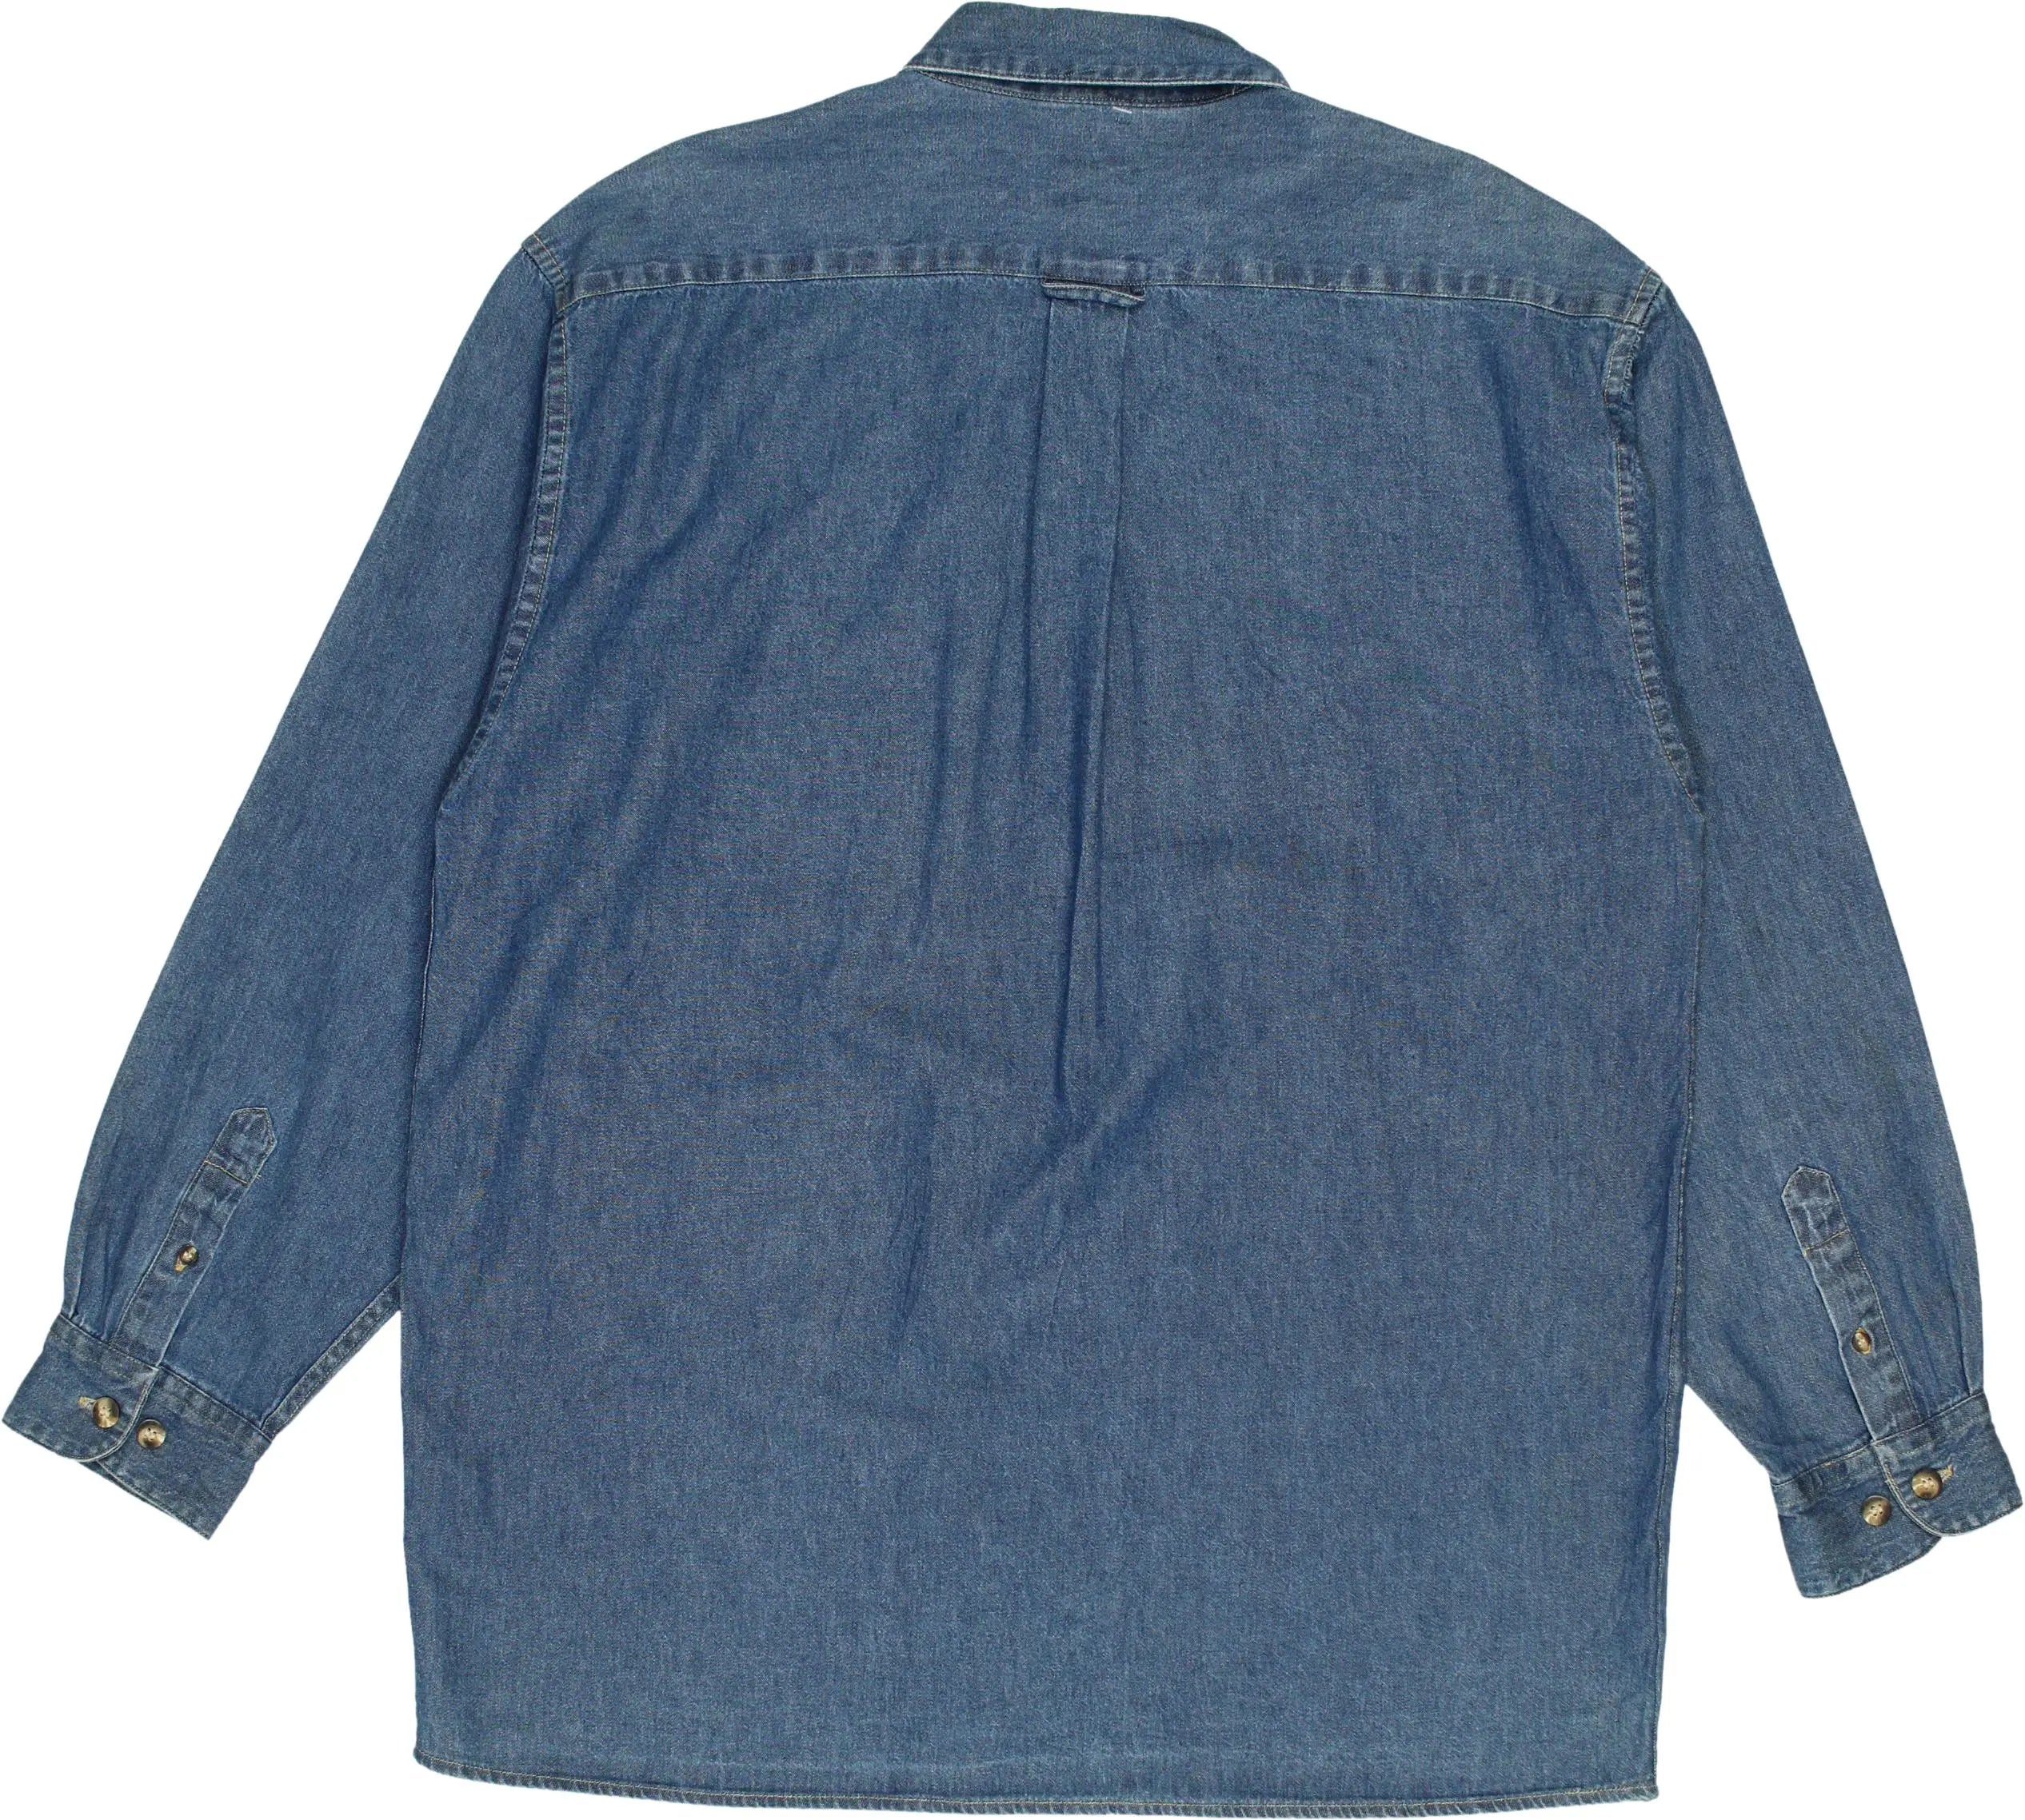 StormTech - Denim Shirt- ThriftTale.com - Vintage and second handclothing